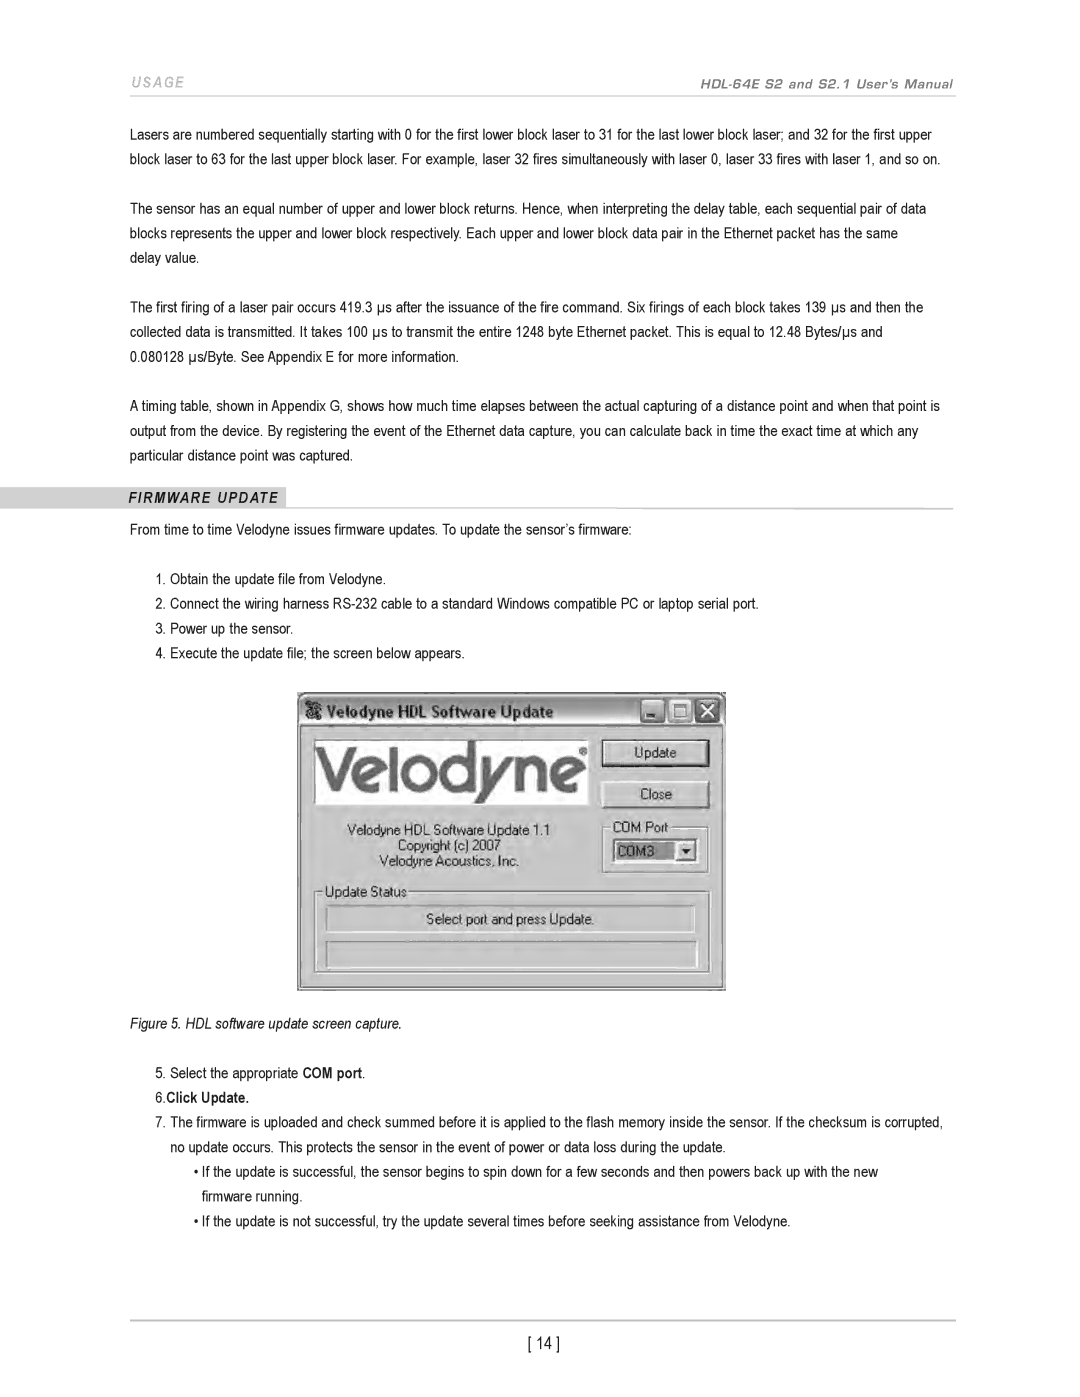 Velodyne Acoustics HDL-64E S2.1 user manual FirMWare uPdate, HDL software update screen capture 